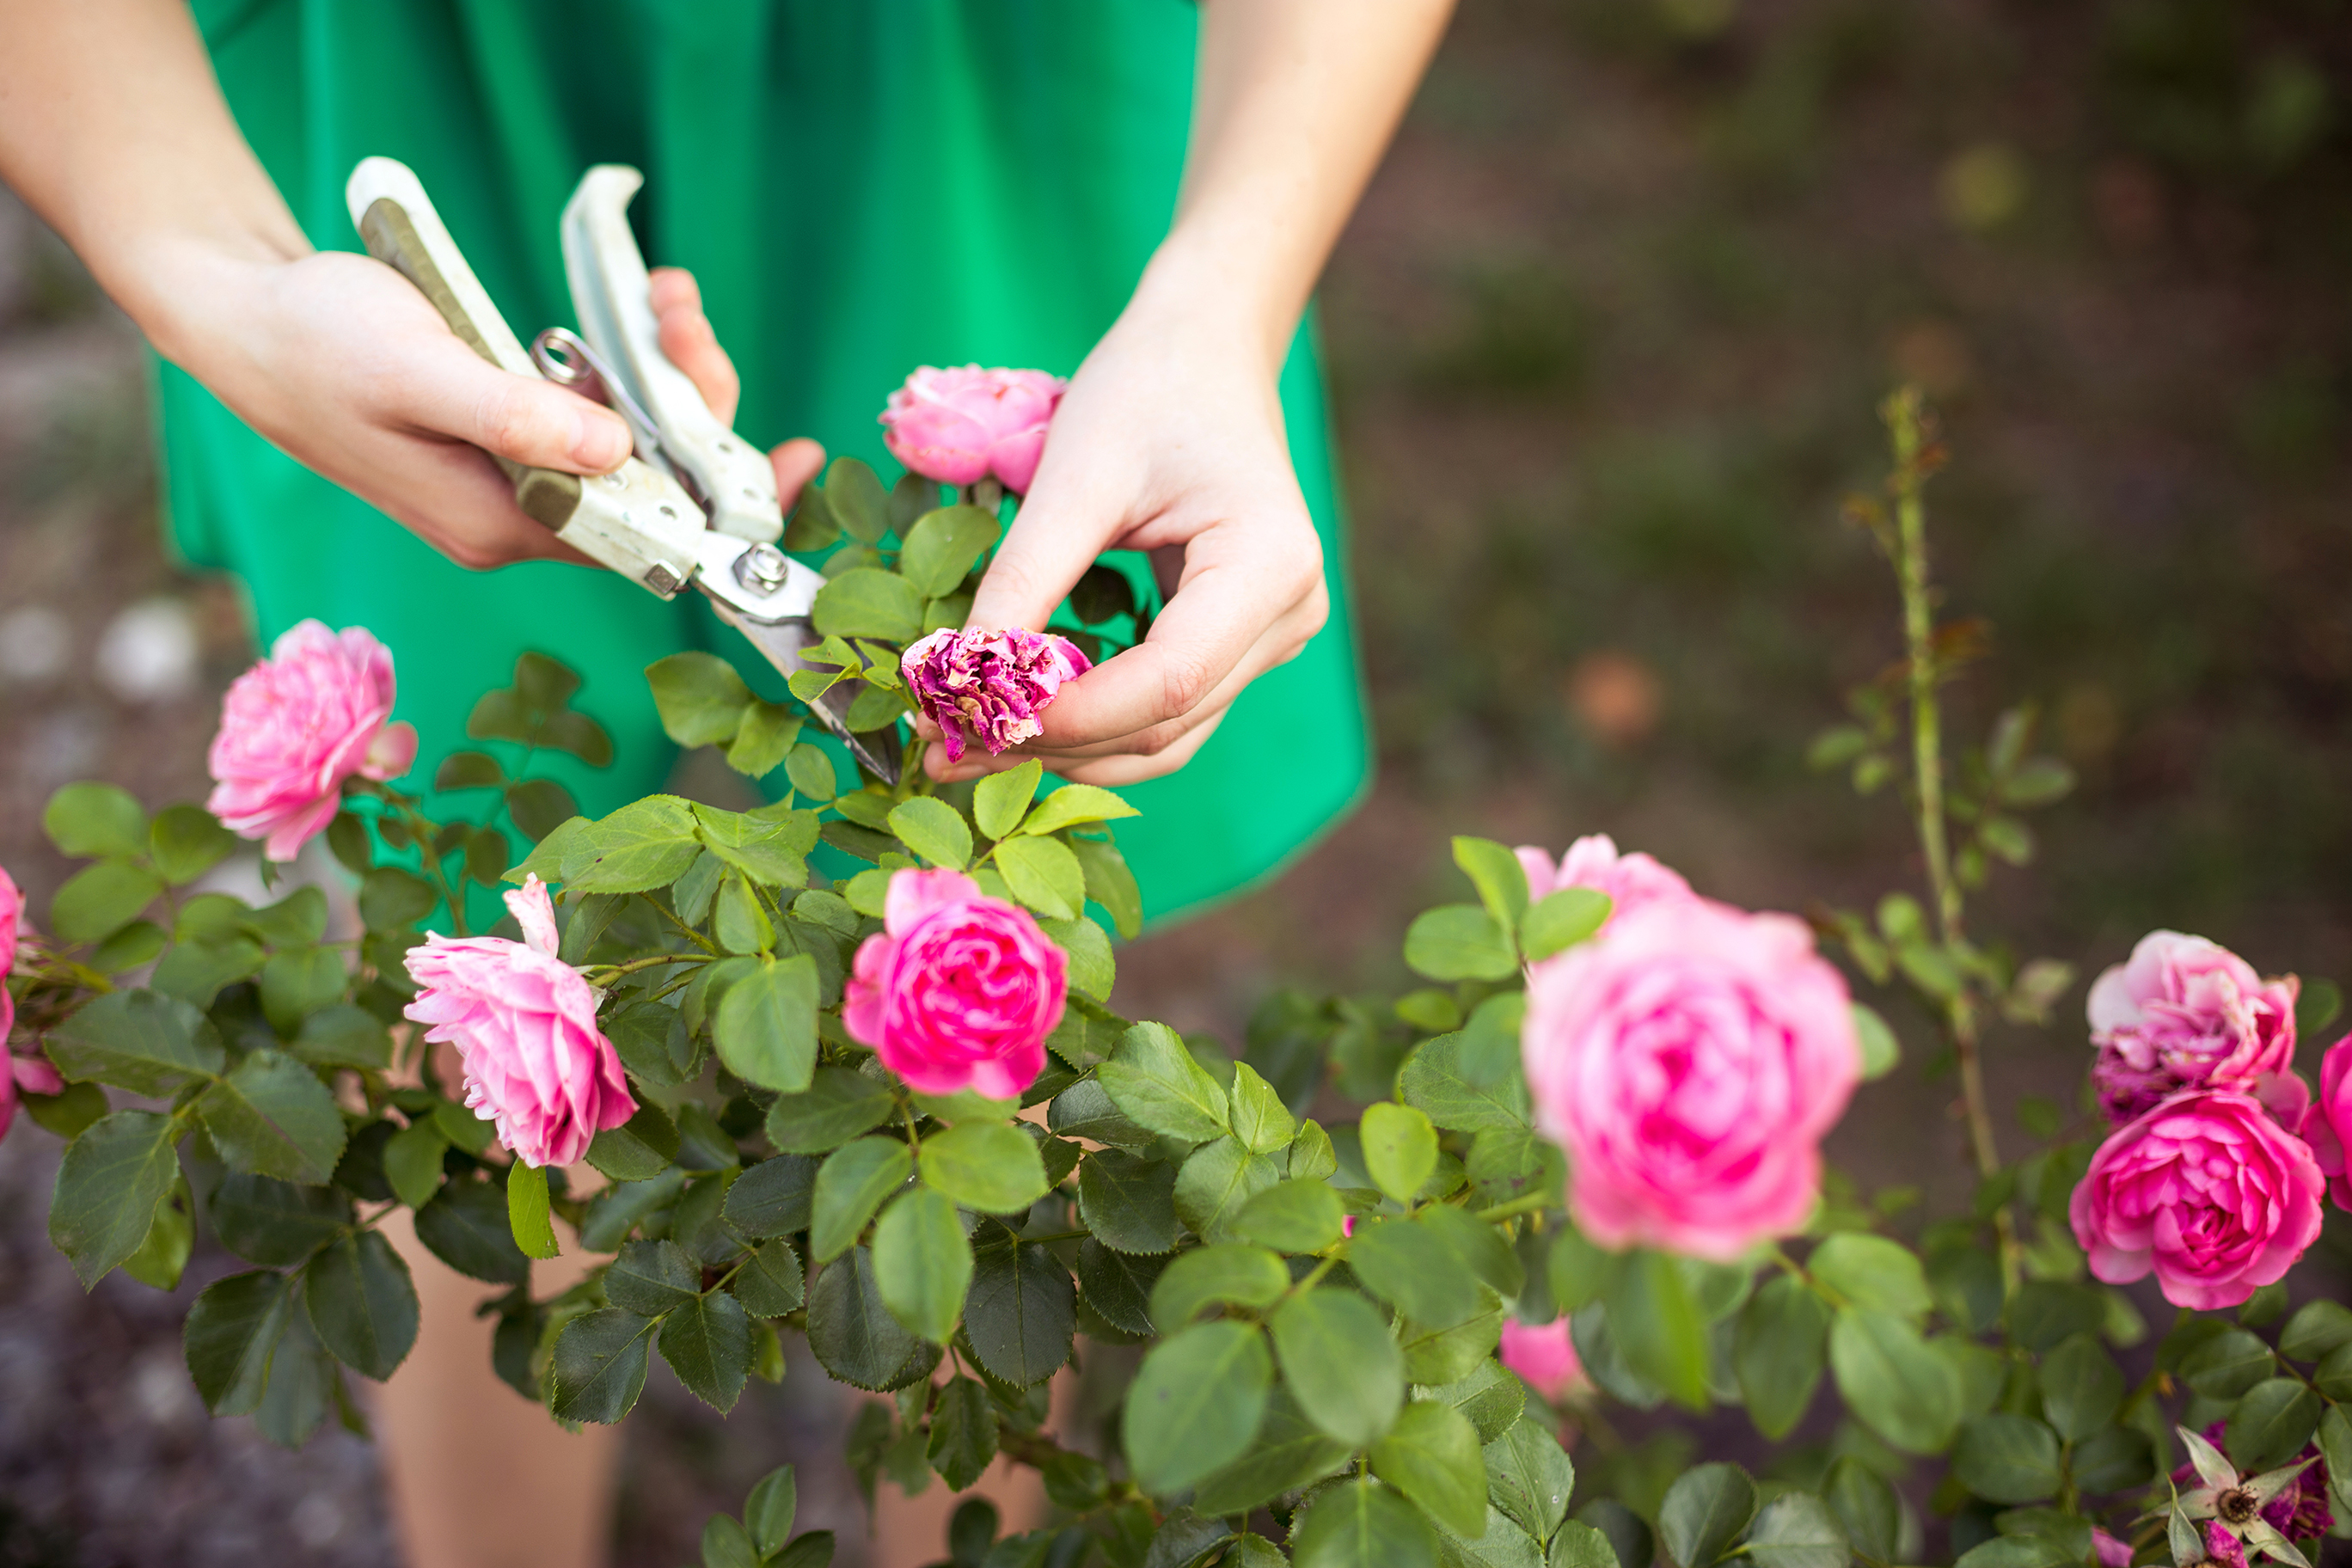 Pruning roses| David Domoney | Miracle Gro